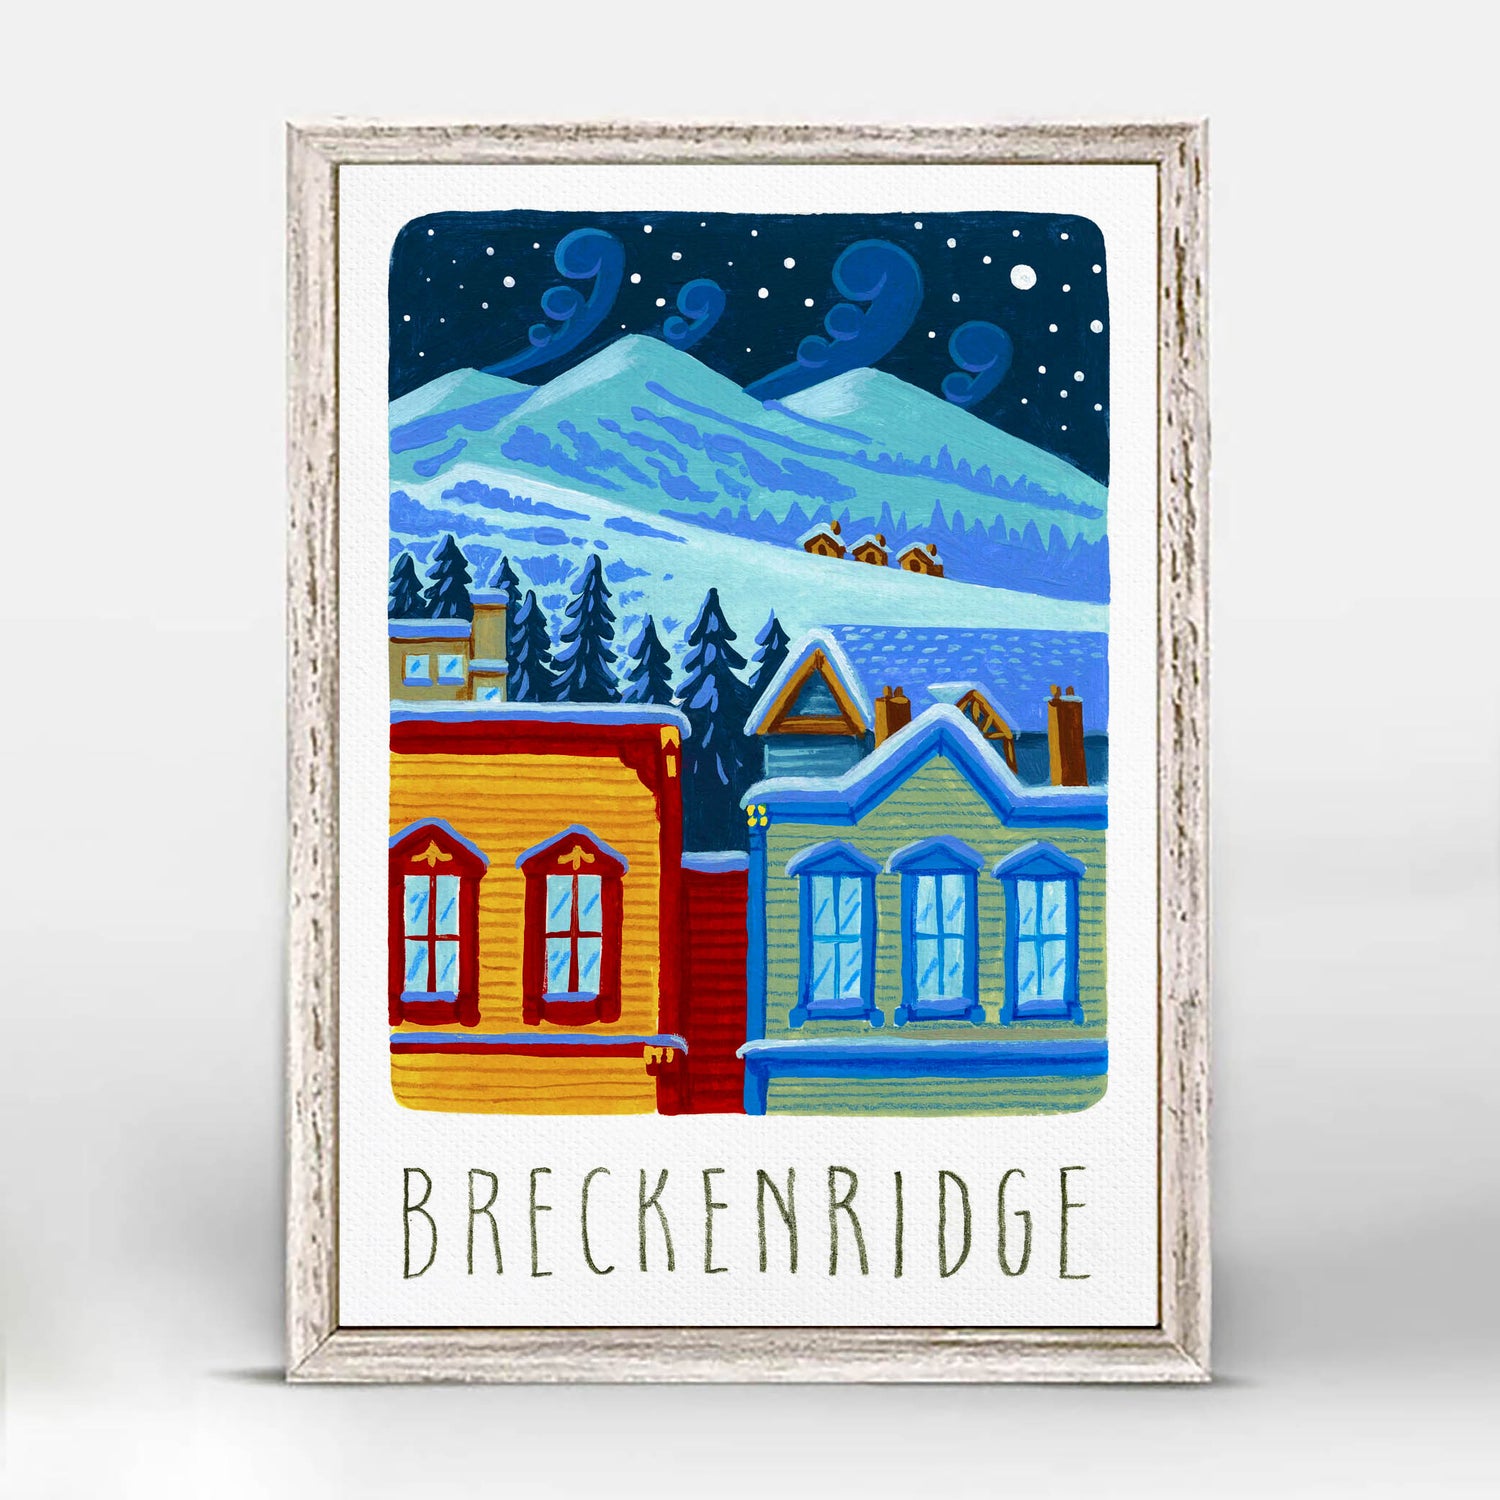 Downtown Breckenridge Colorado historic Main Street illustration with ski slopes; artwork by Angela Staehling